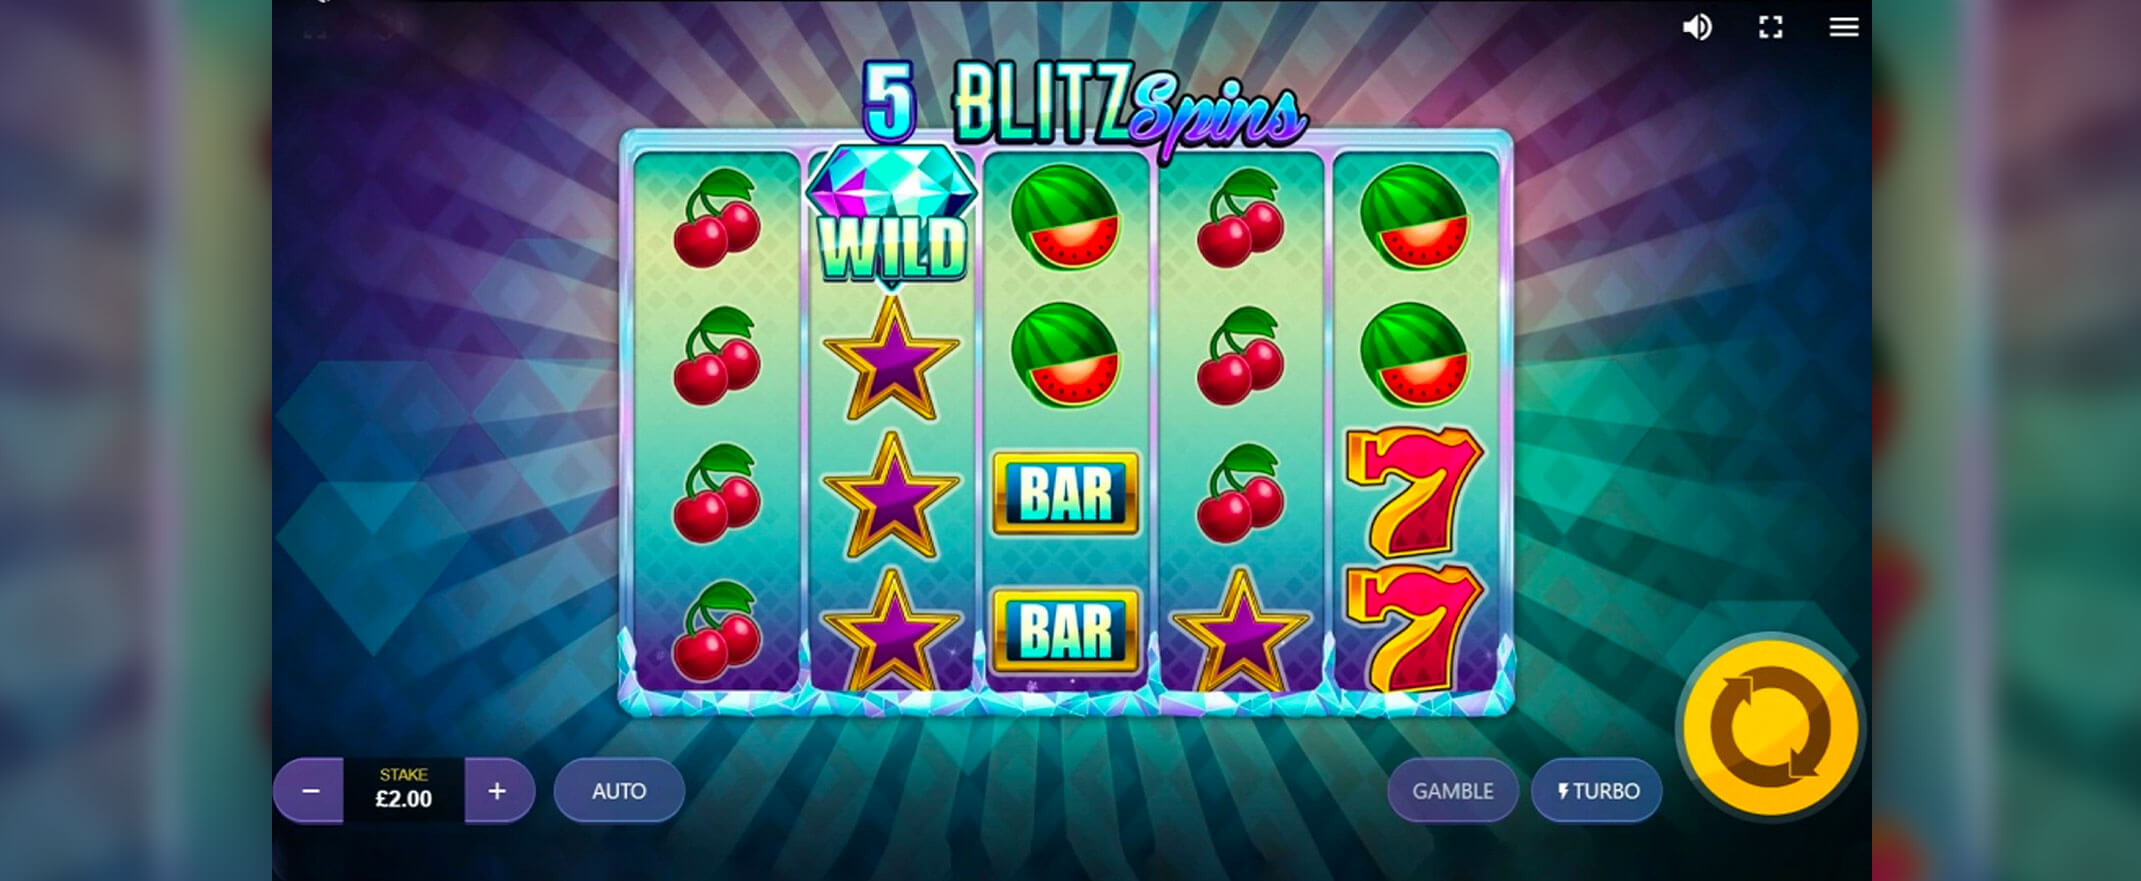 Diamond Blitz Spielautomaten Bewertung